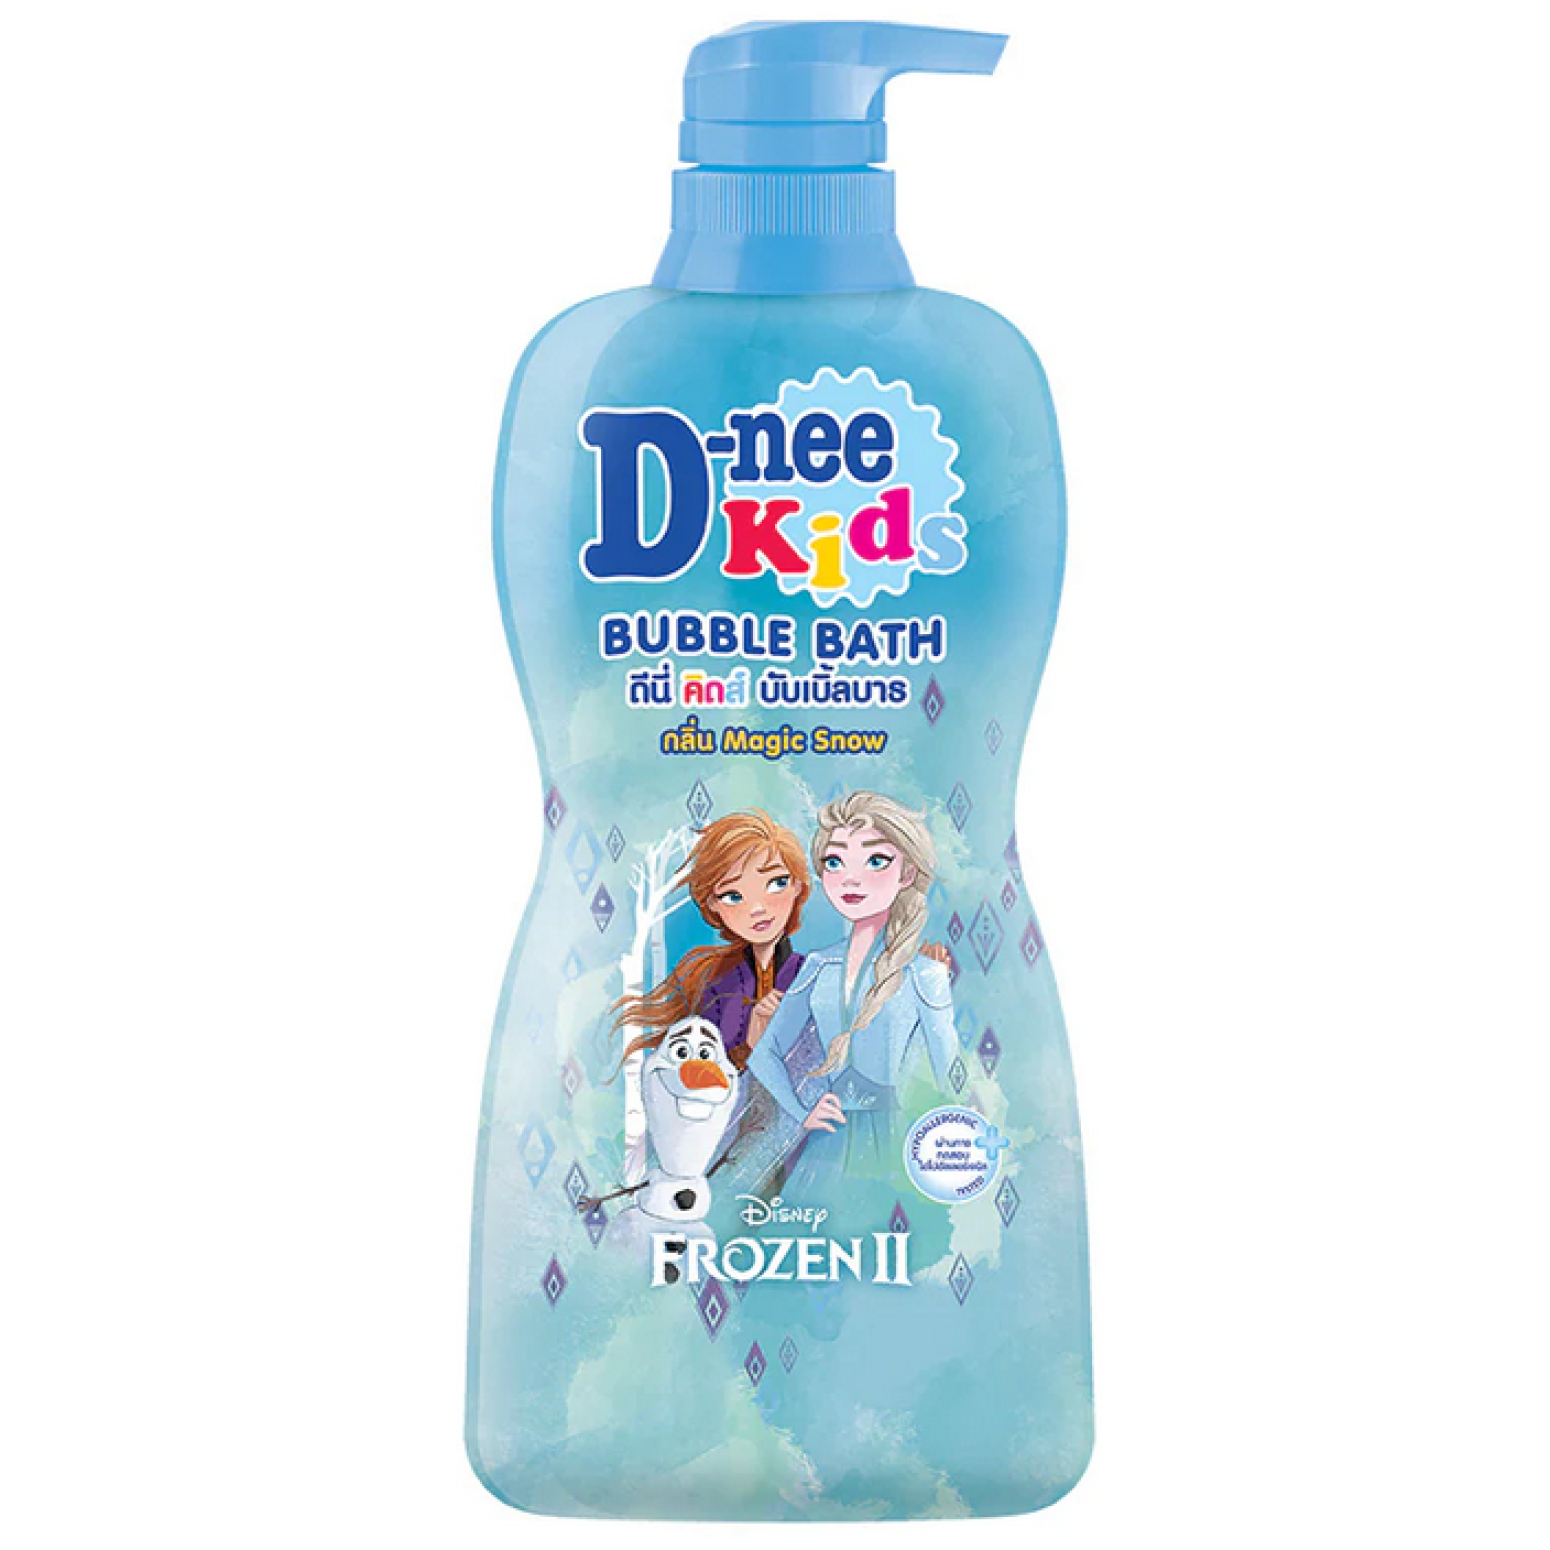 D-nee Kids Magic Snow Bubble Bath